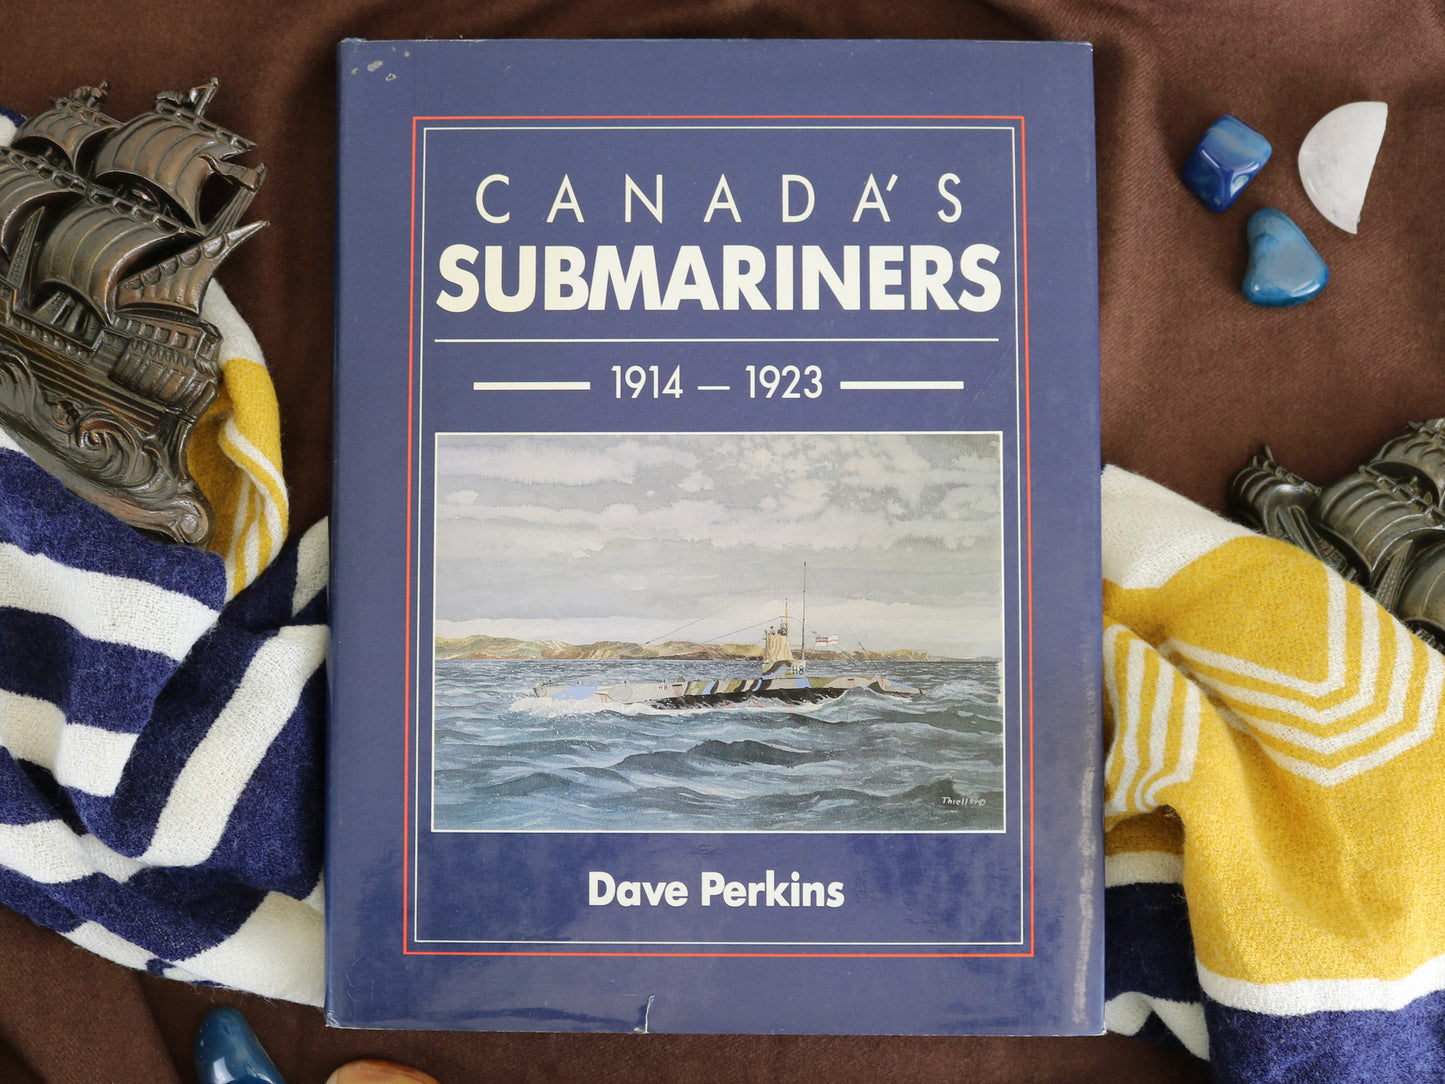 Canada's Submariners Royal Canadian Navy History Used Book